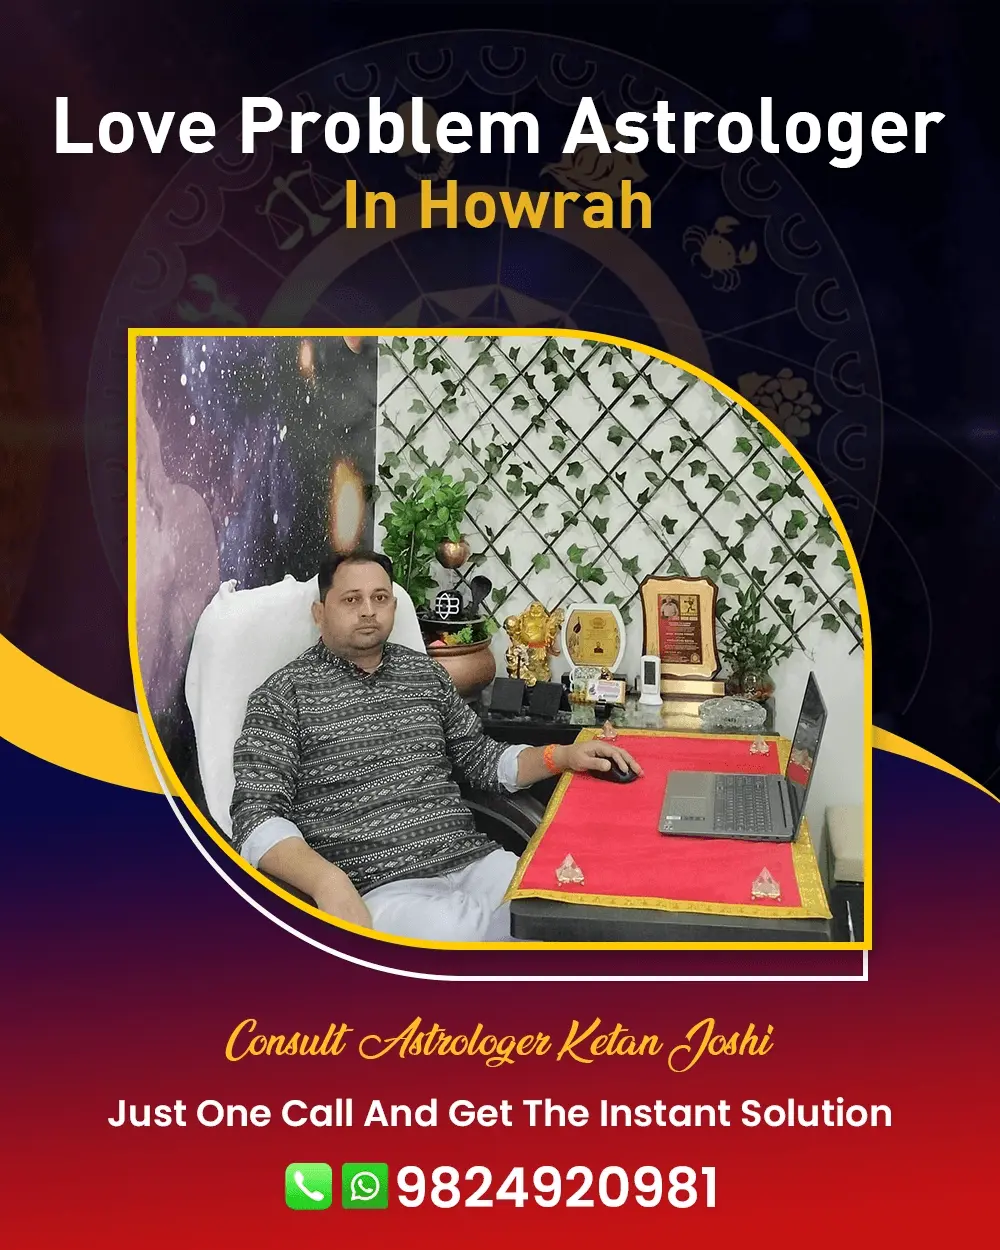 Love Problem Astrologer In Howrah